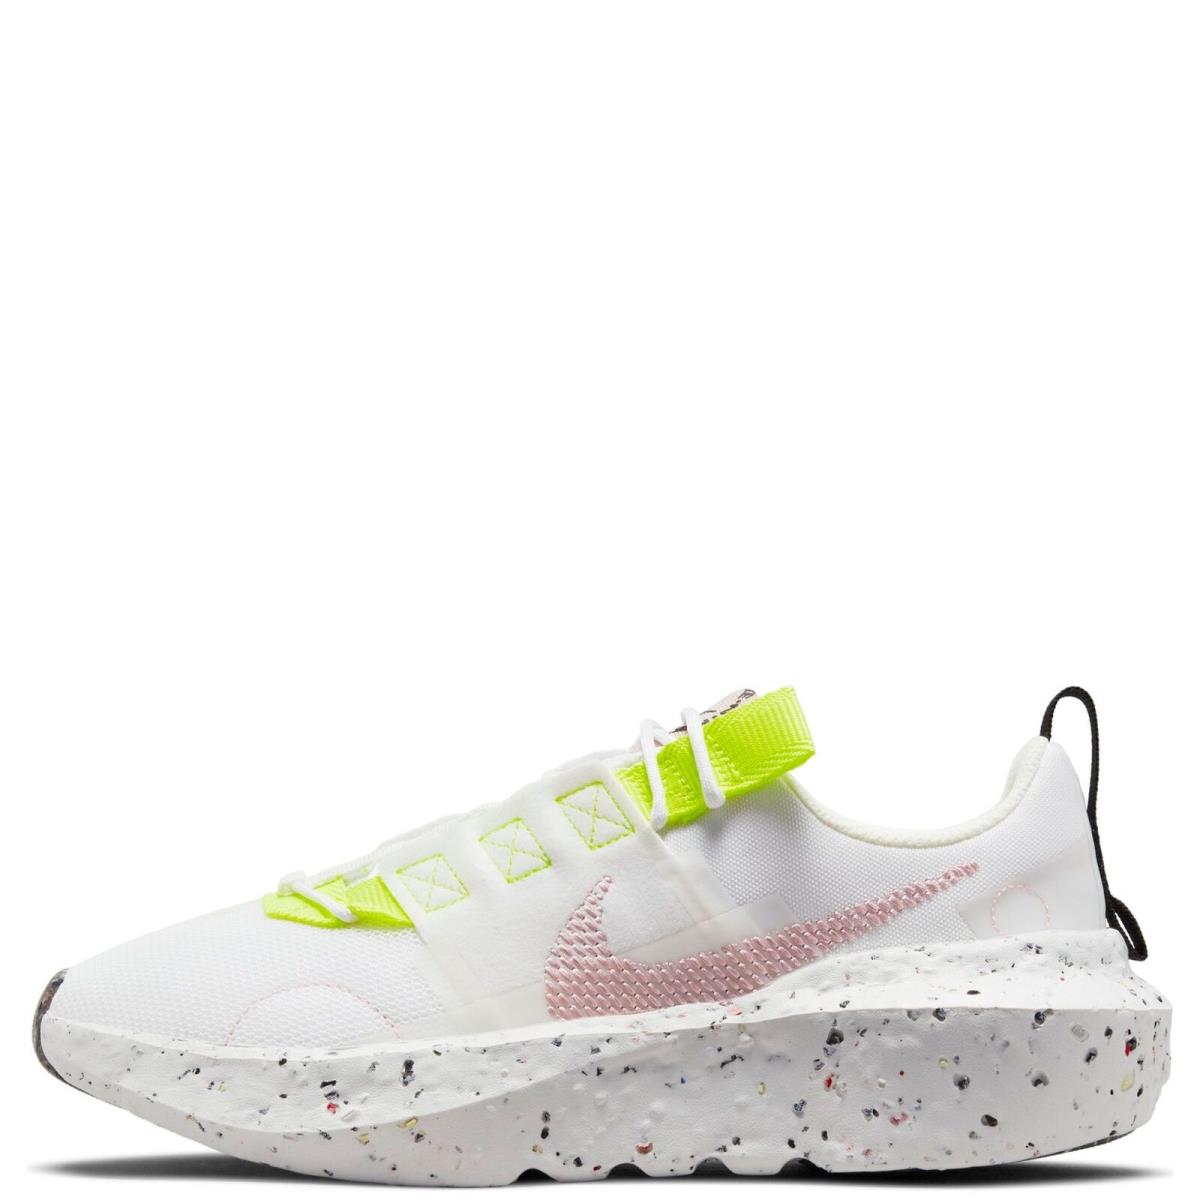 Nike Crater Impact Women Size 5.5 TO 11.0 White Pink Glaze Running Comfort